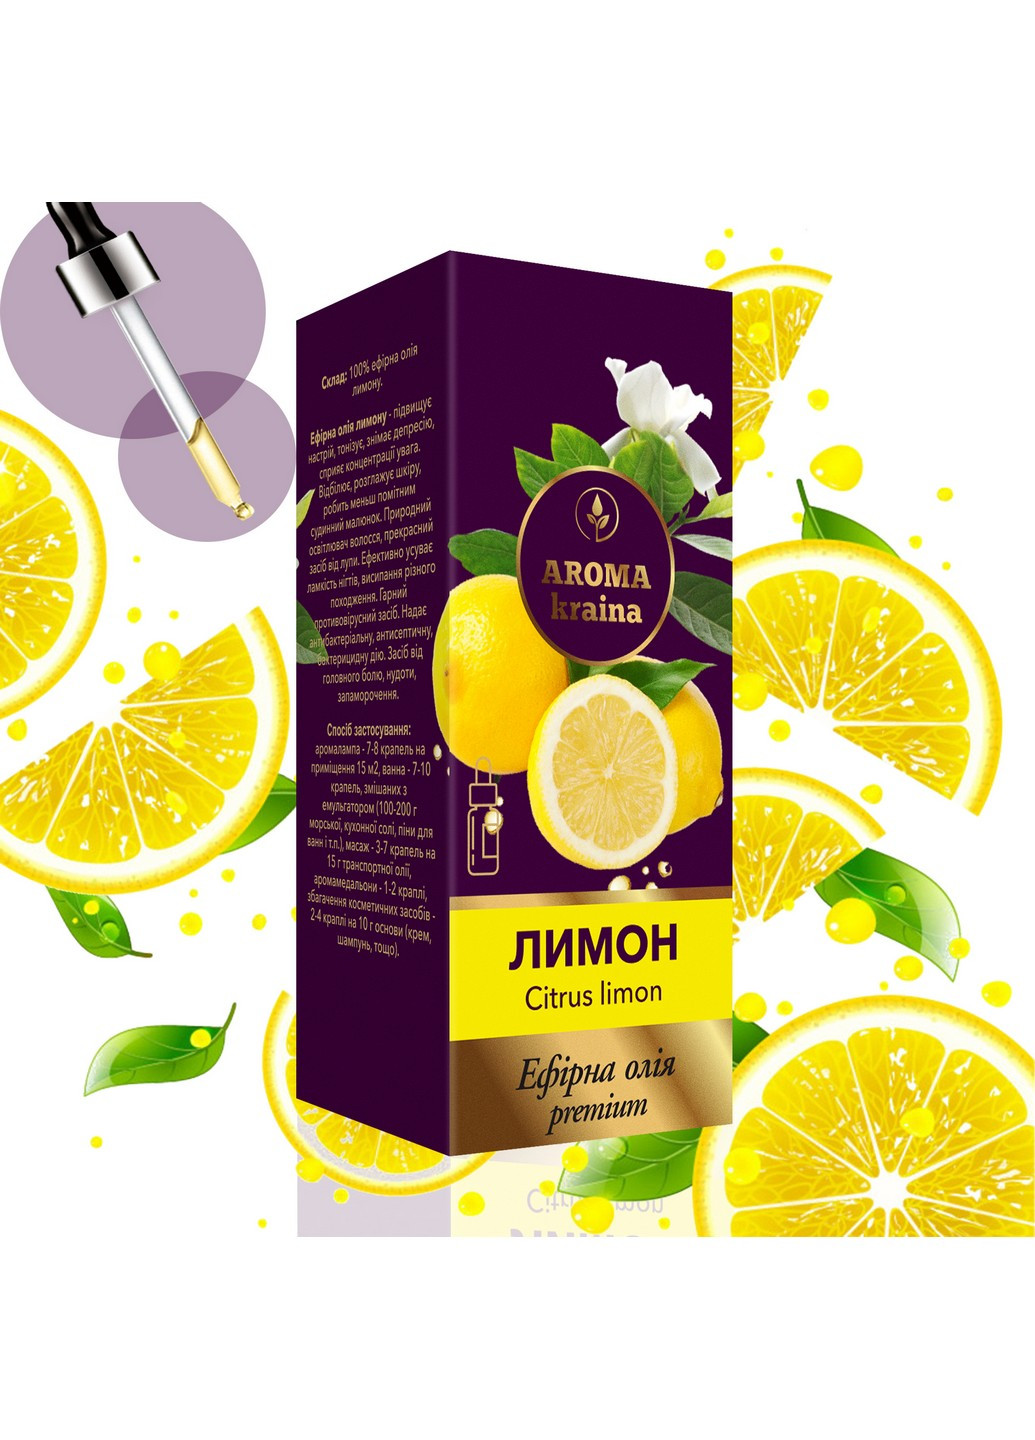 Ефірна олія " Premium Лимон" 10 мл Aroma kraina (266902547)